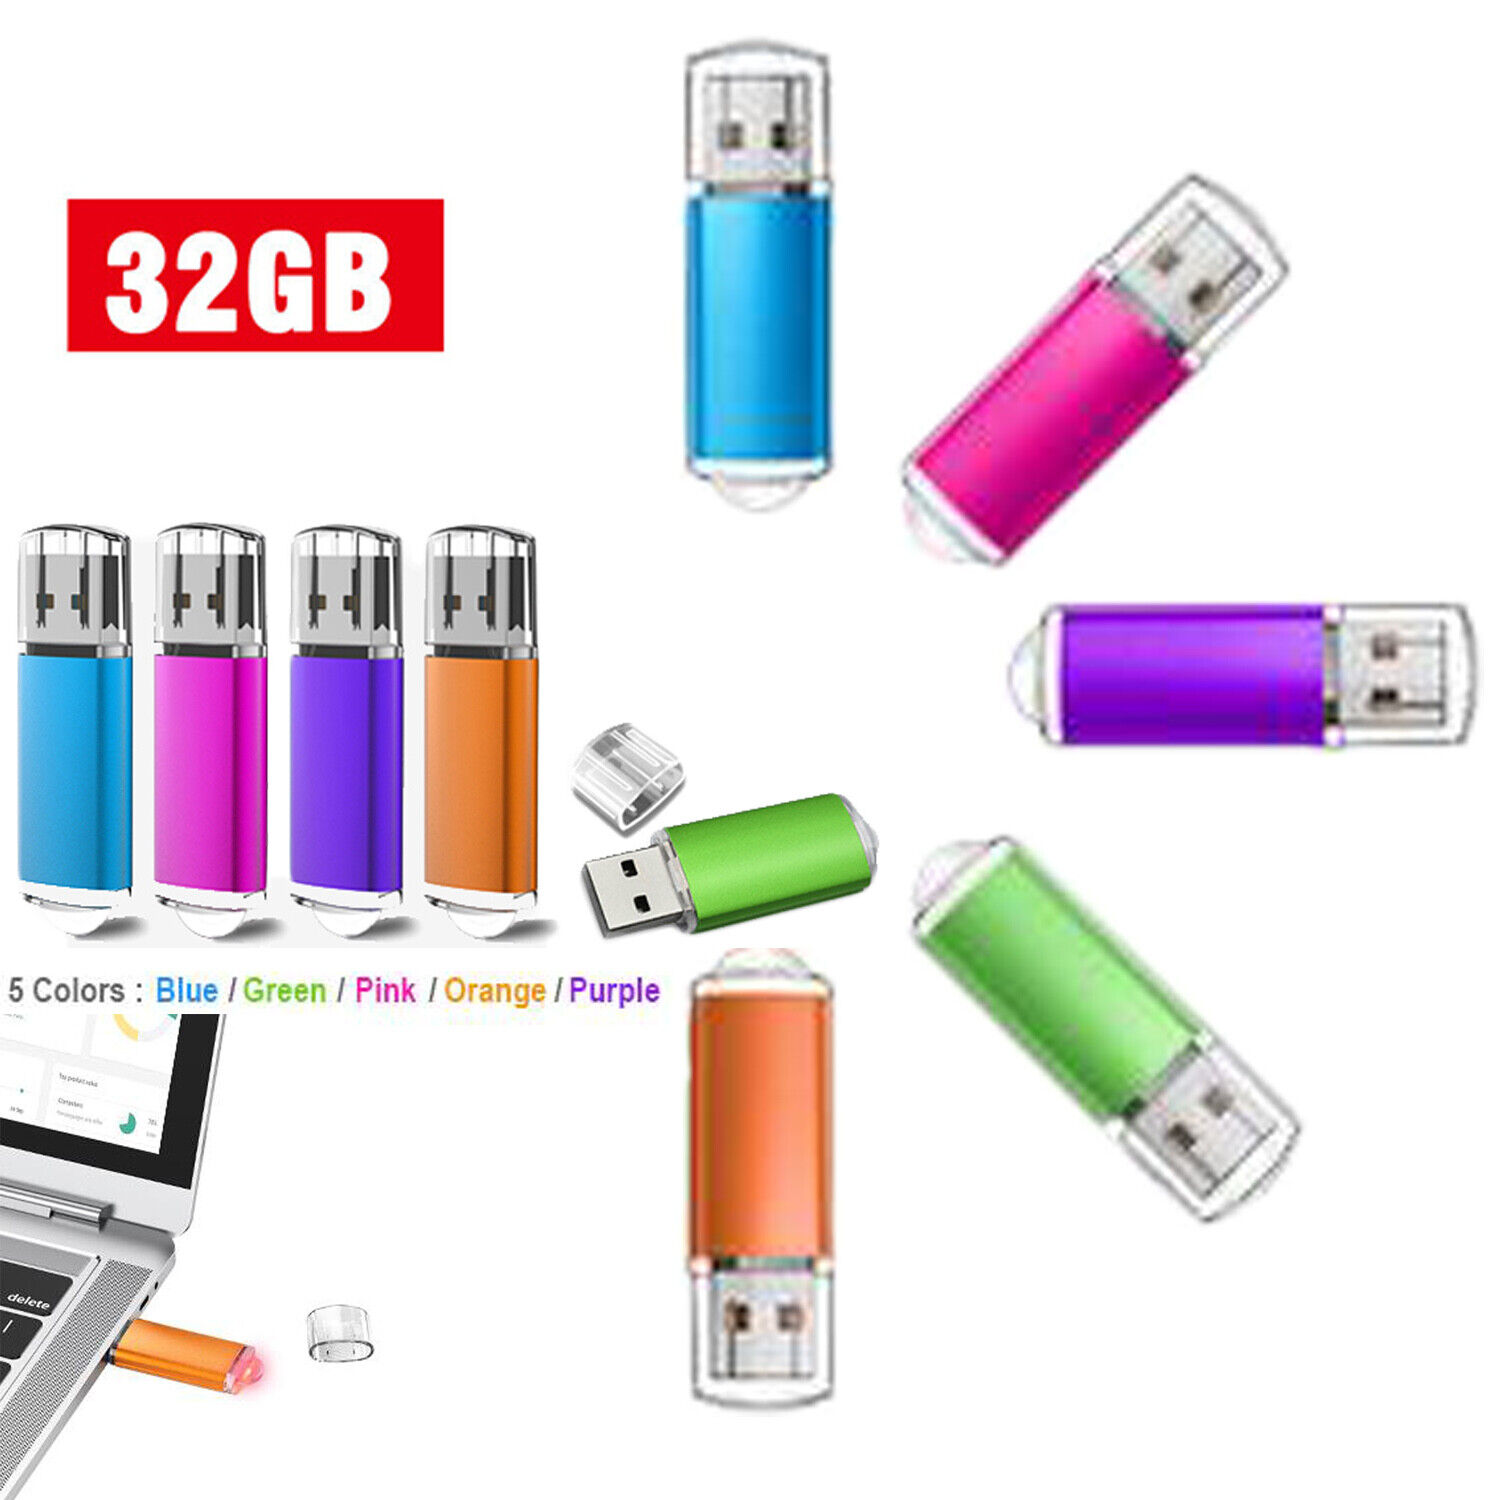 Lot 32GB Flash Drive USB 2.0 Memory Stick for Office School Data Storage